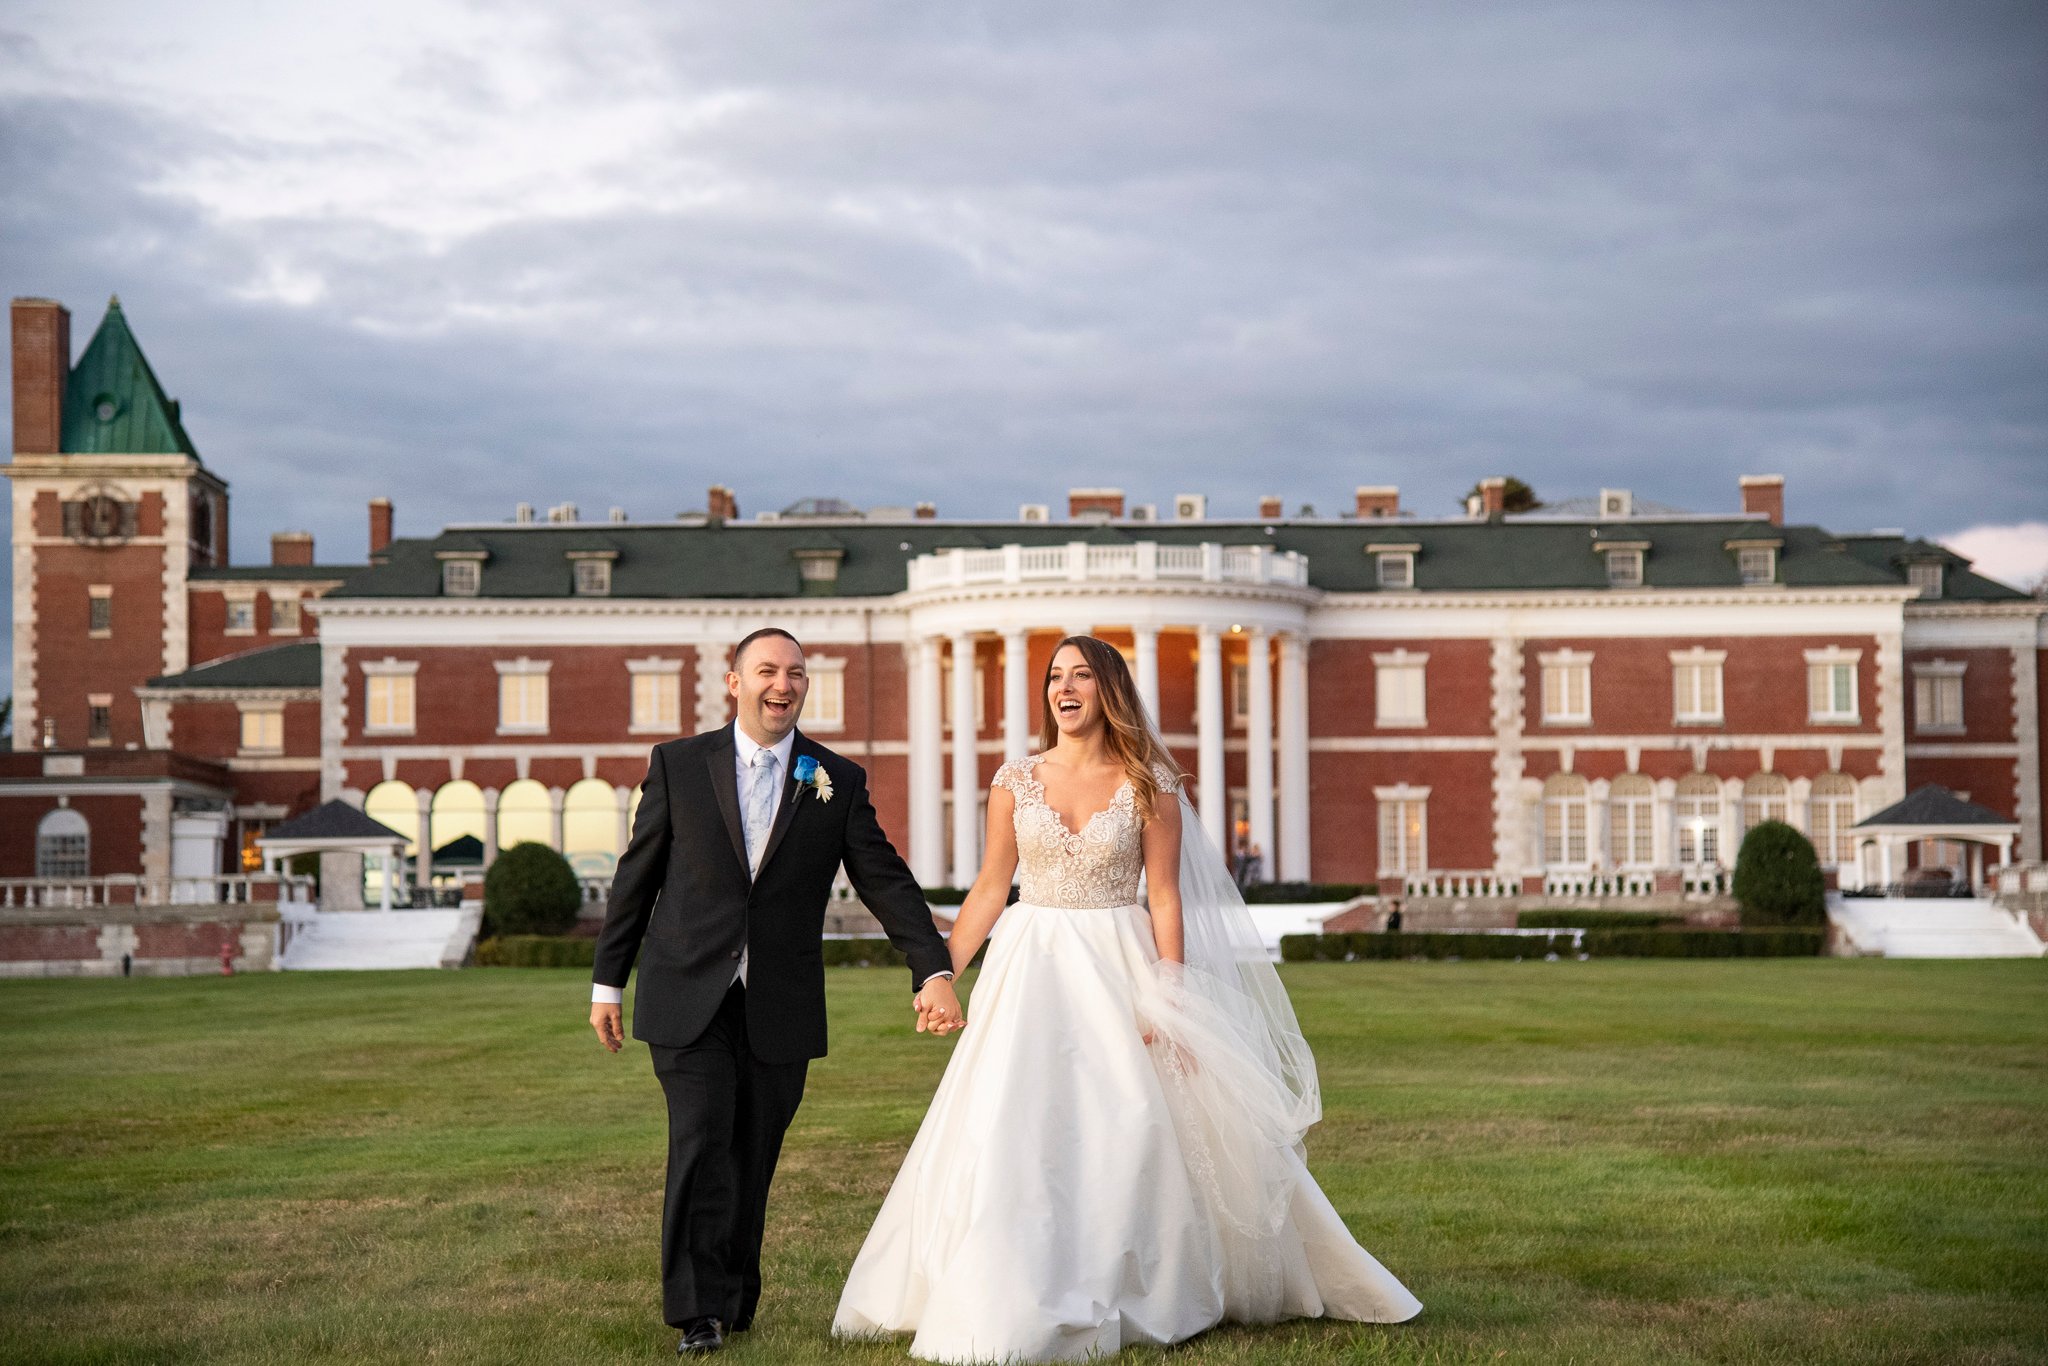 Bourne Mansion - Dramatic Wedding Photos